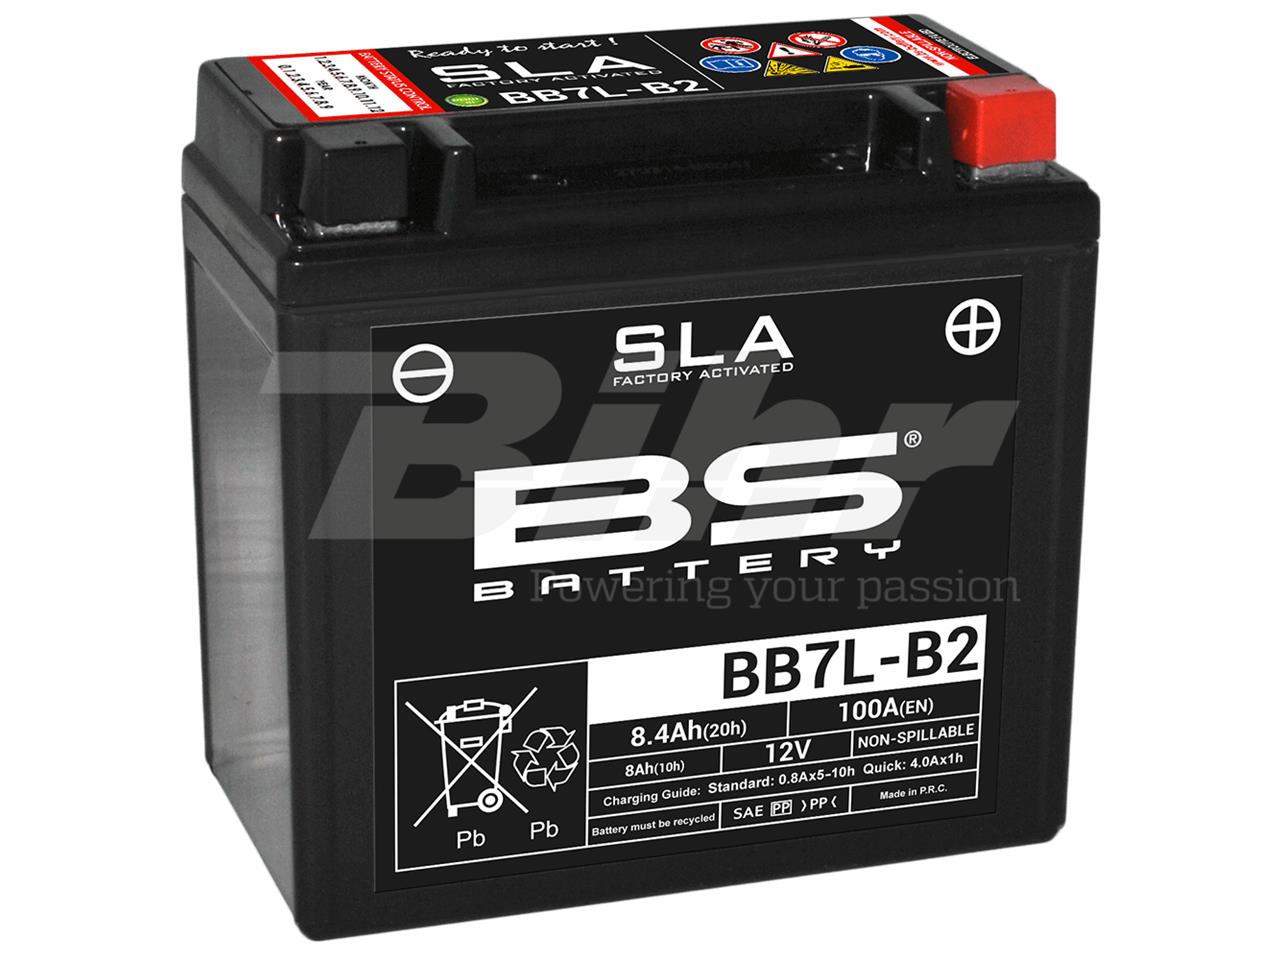 batteria sla bs battery a gel yb7l-b2 12v 8ah - lunghezza 135 x larghezza 75 x altezza 133mm pronta all´uso preattivata 35849 - 1080687 